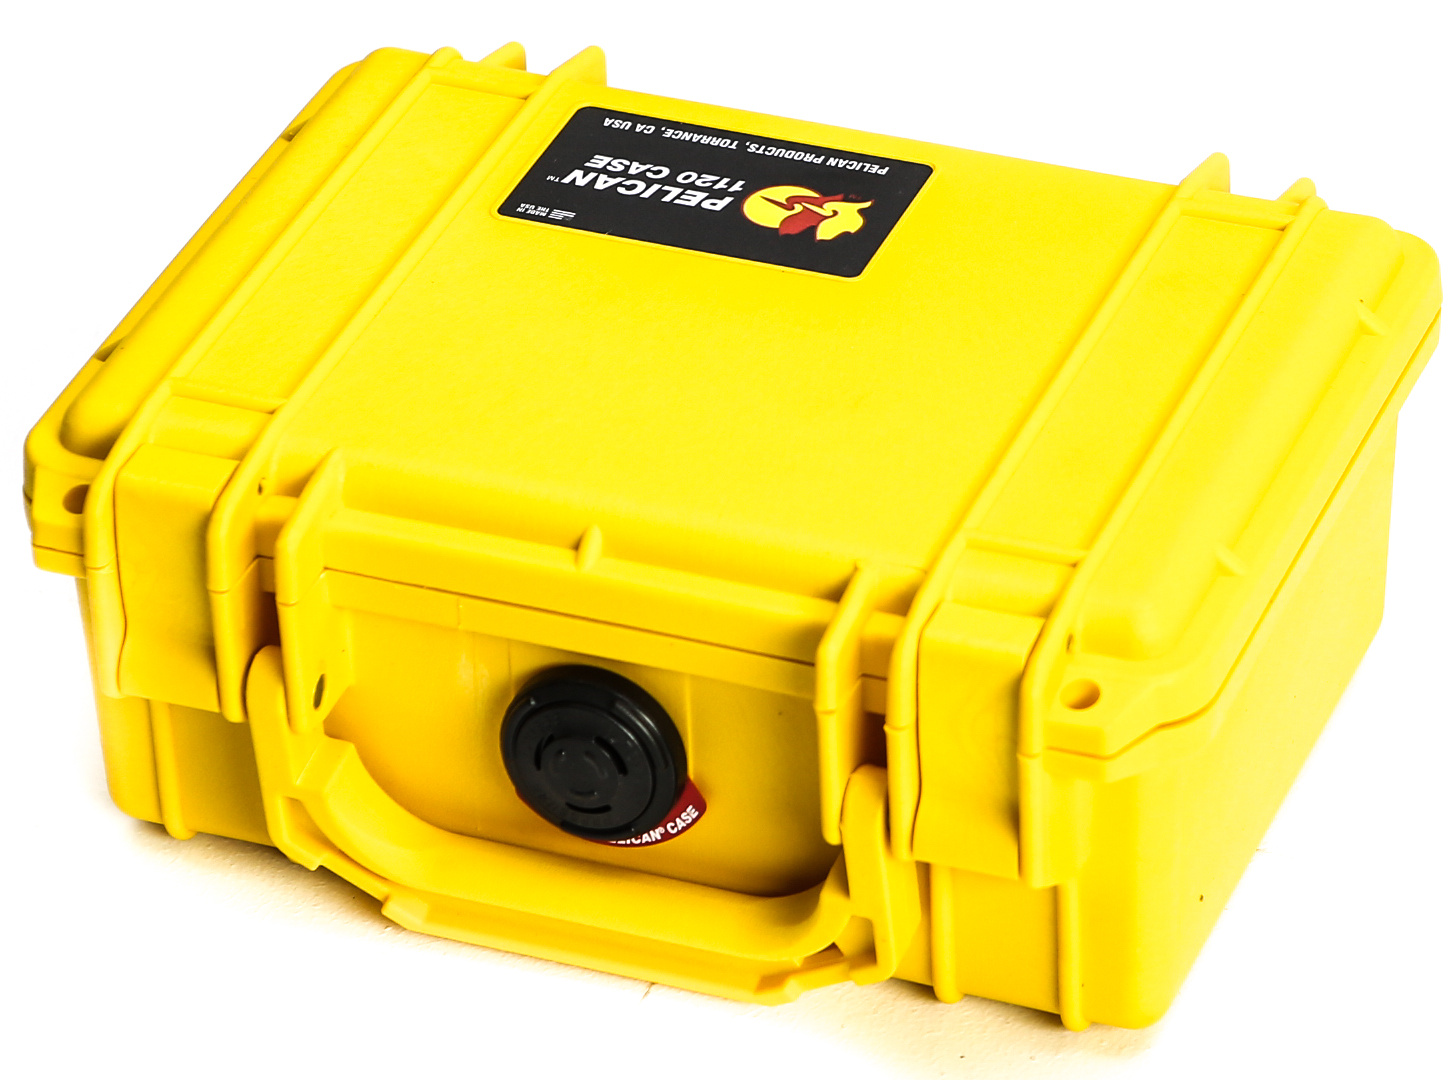 Pelican 1120 Case (Yellow)